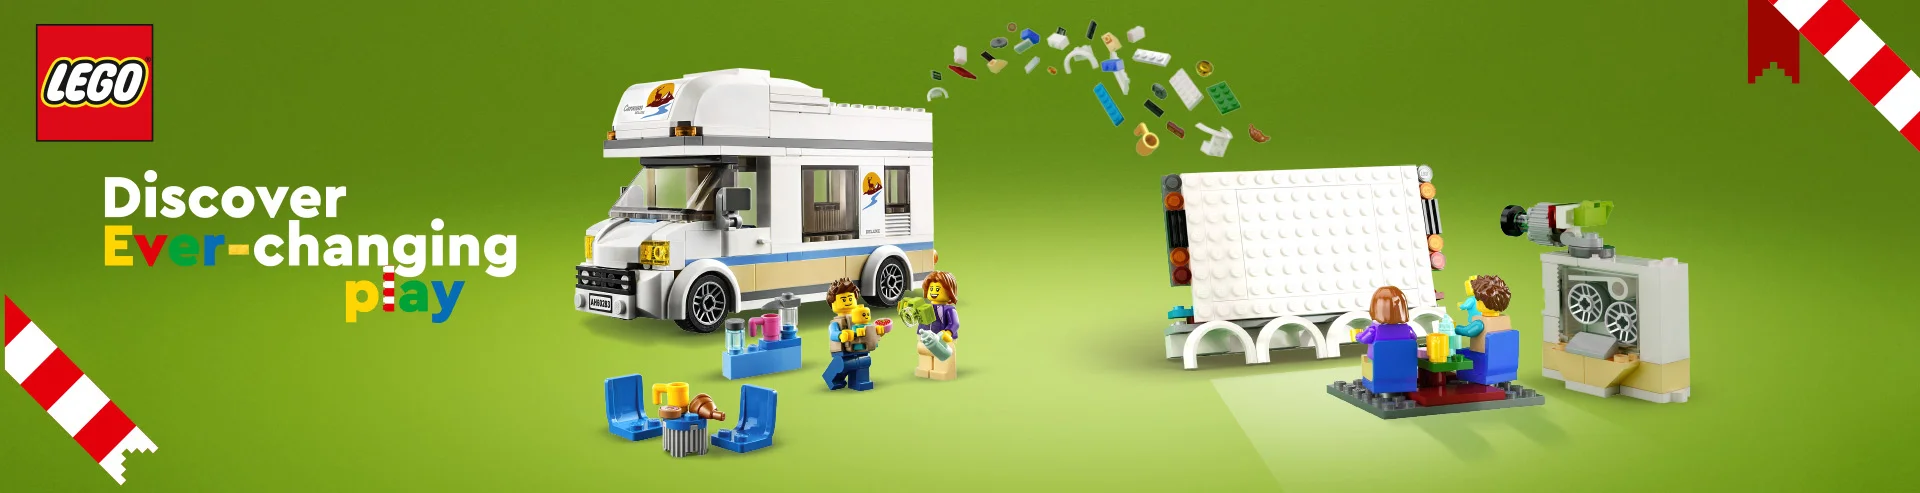 Full-Width-Large-LEGO-Discover-Ever-Changing-Play-Desktop.webp